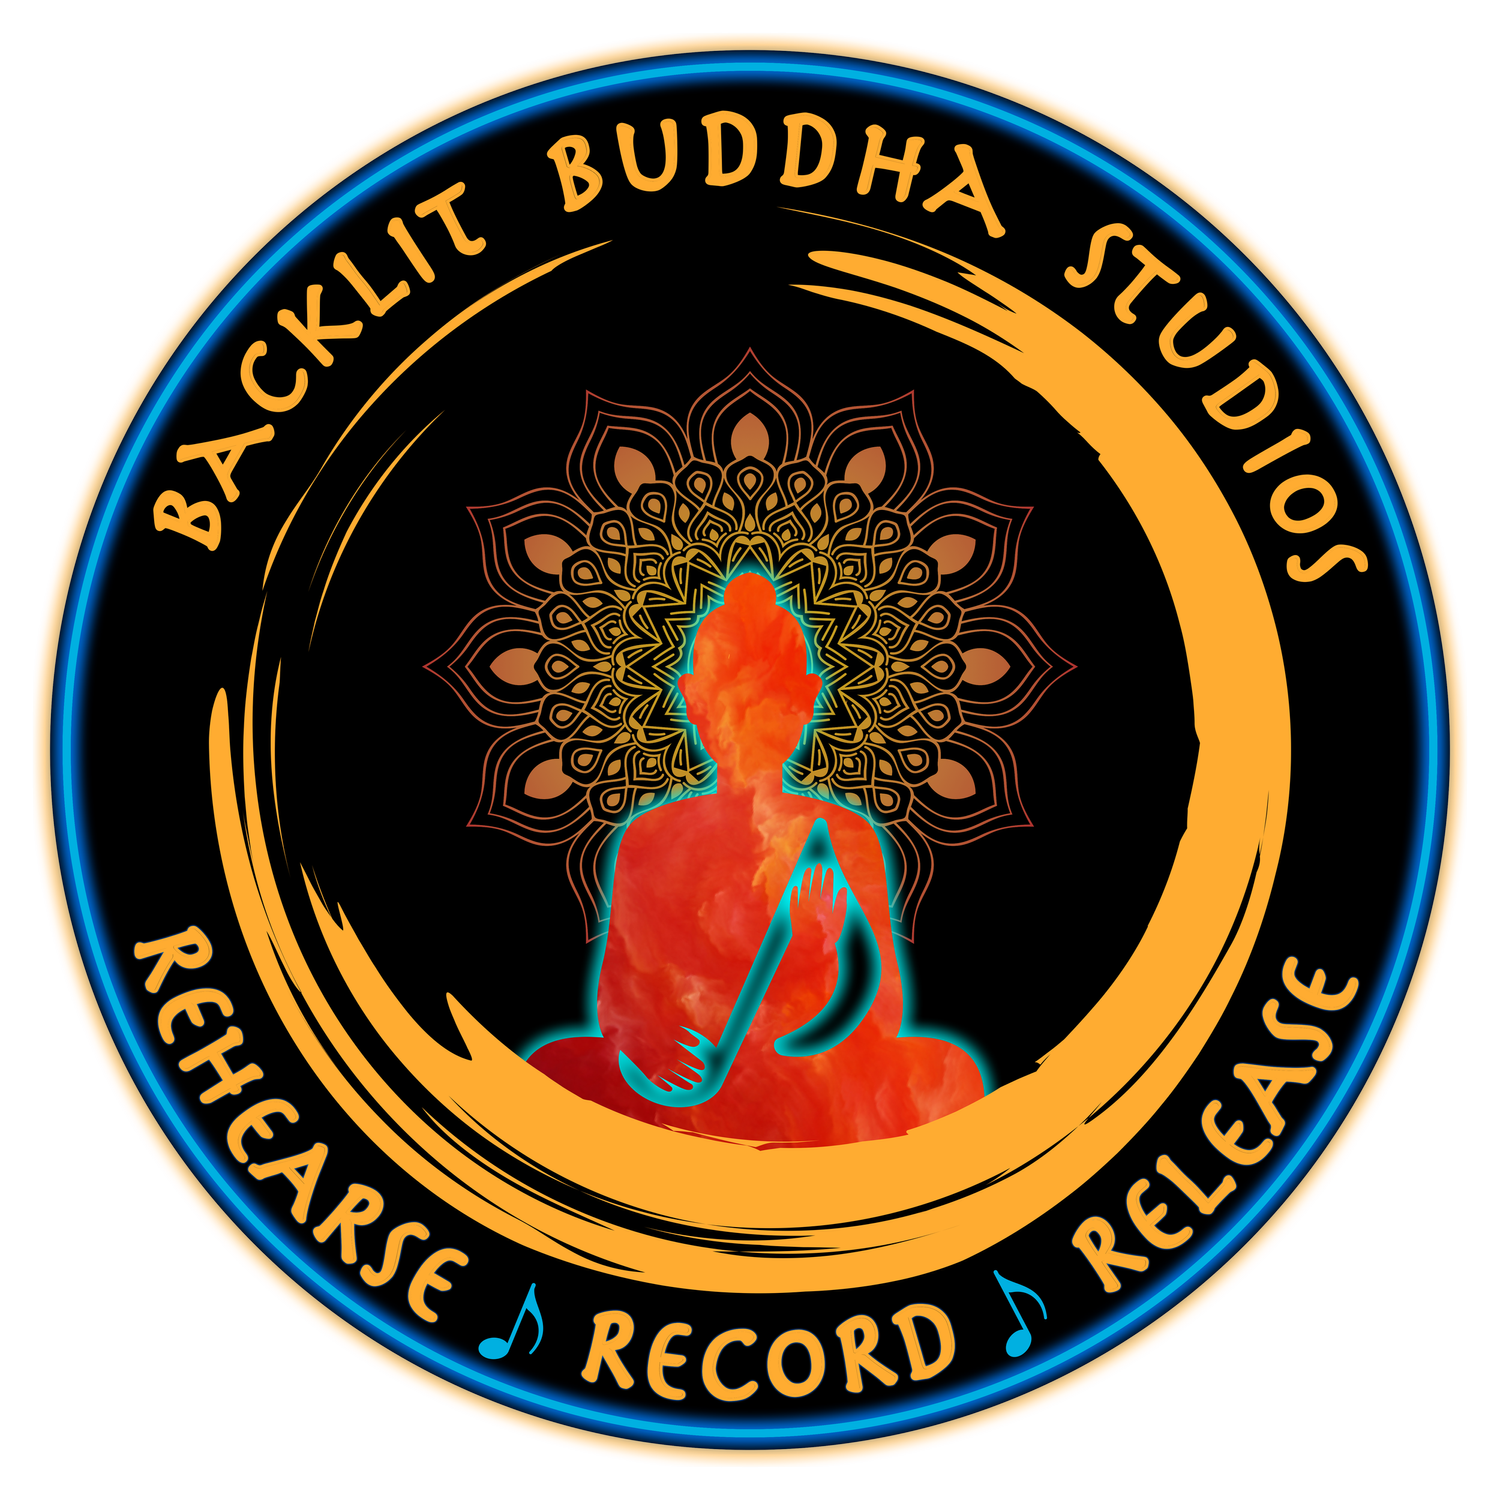 BackLit Buddha Studios